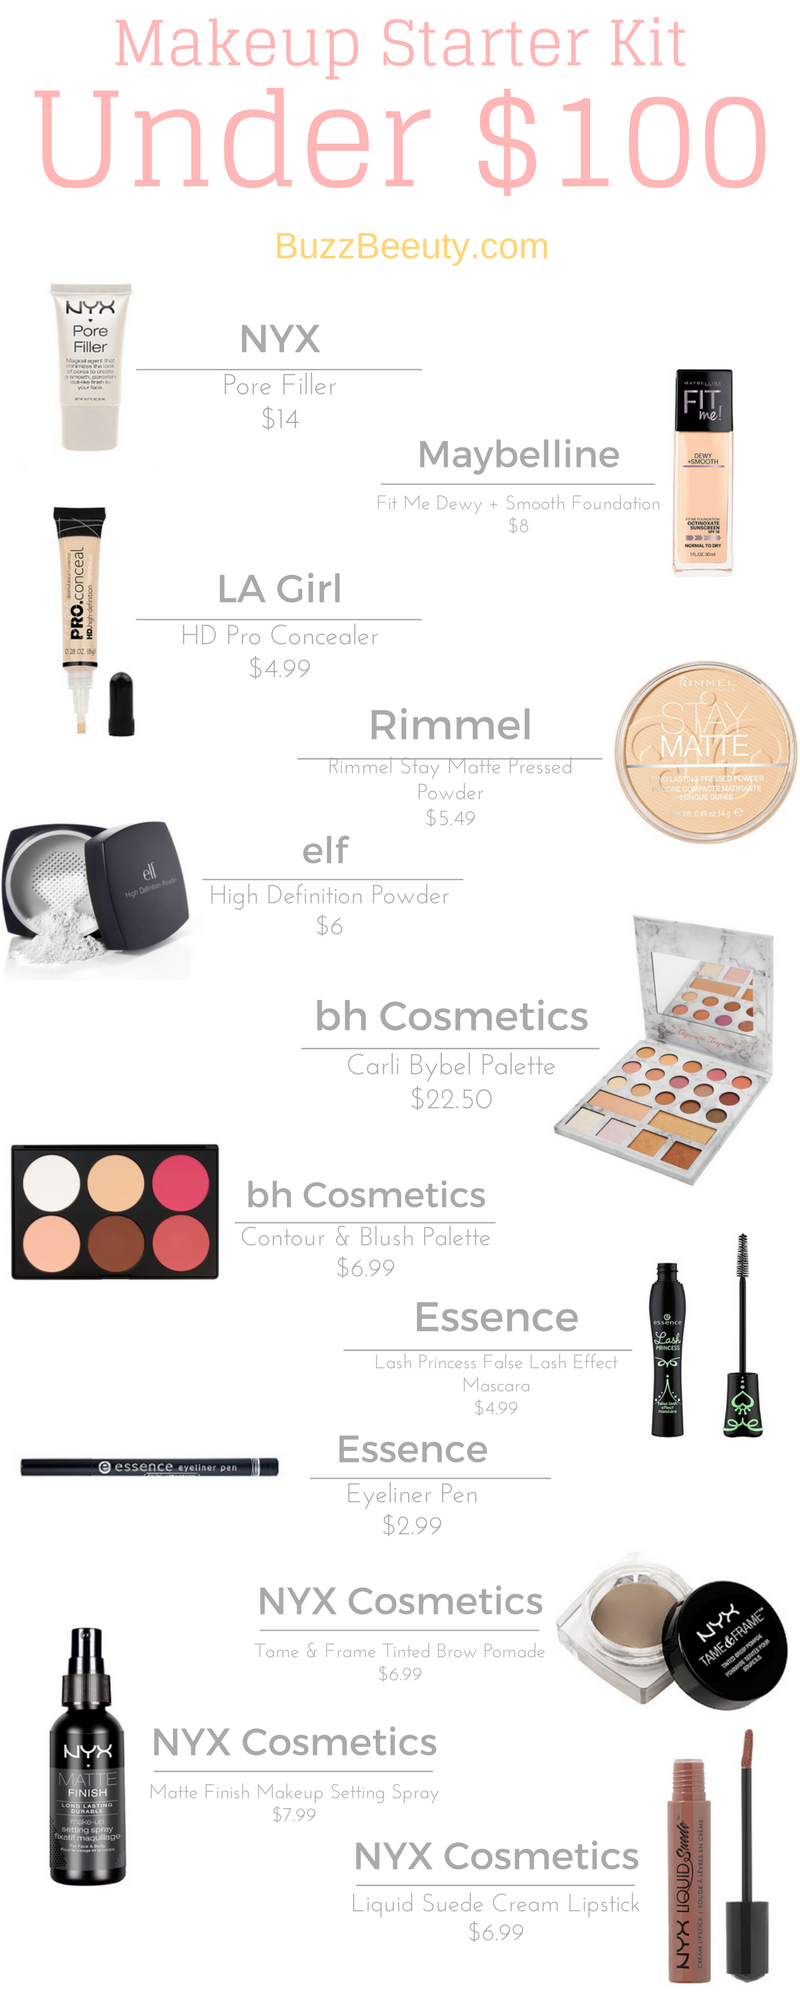 Makeup Starter Kit Under $100